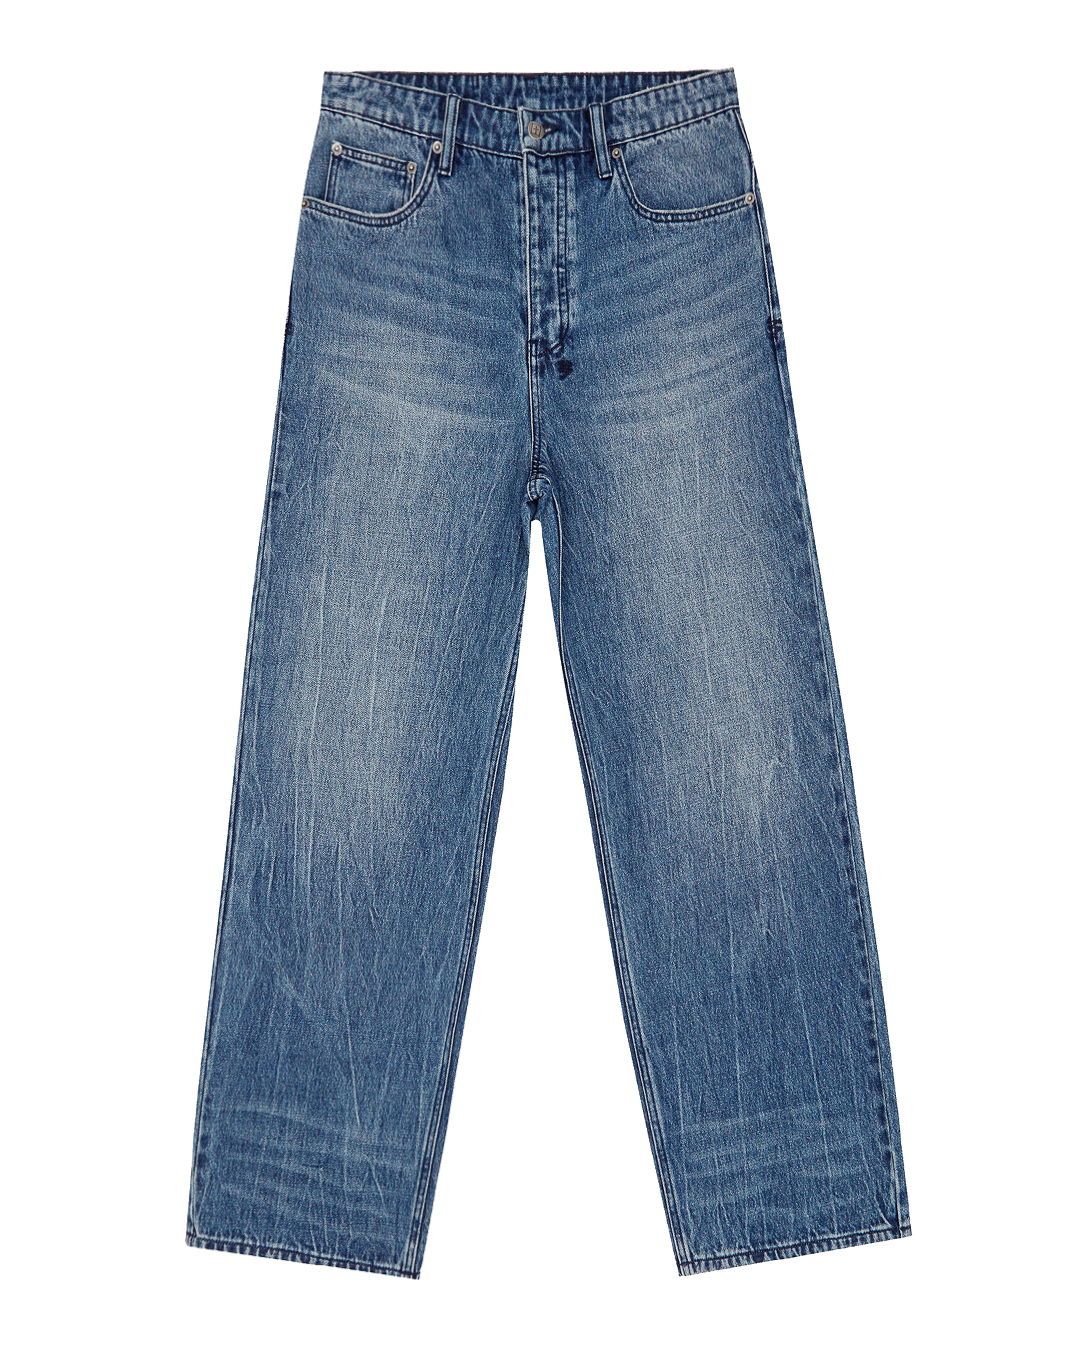 джинсы KSUBI MPS24DJ020 синий 33, размер 33 - фото 1